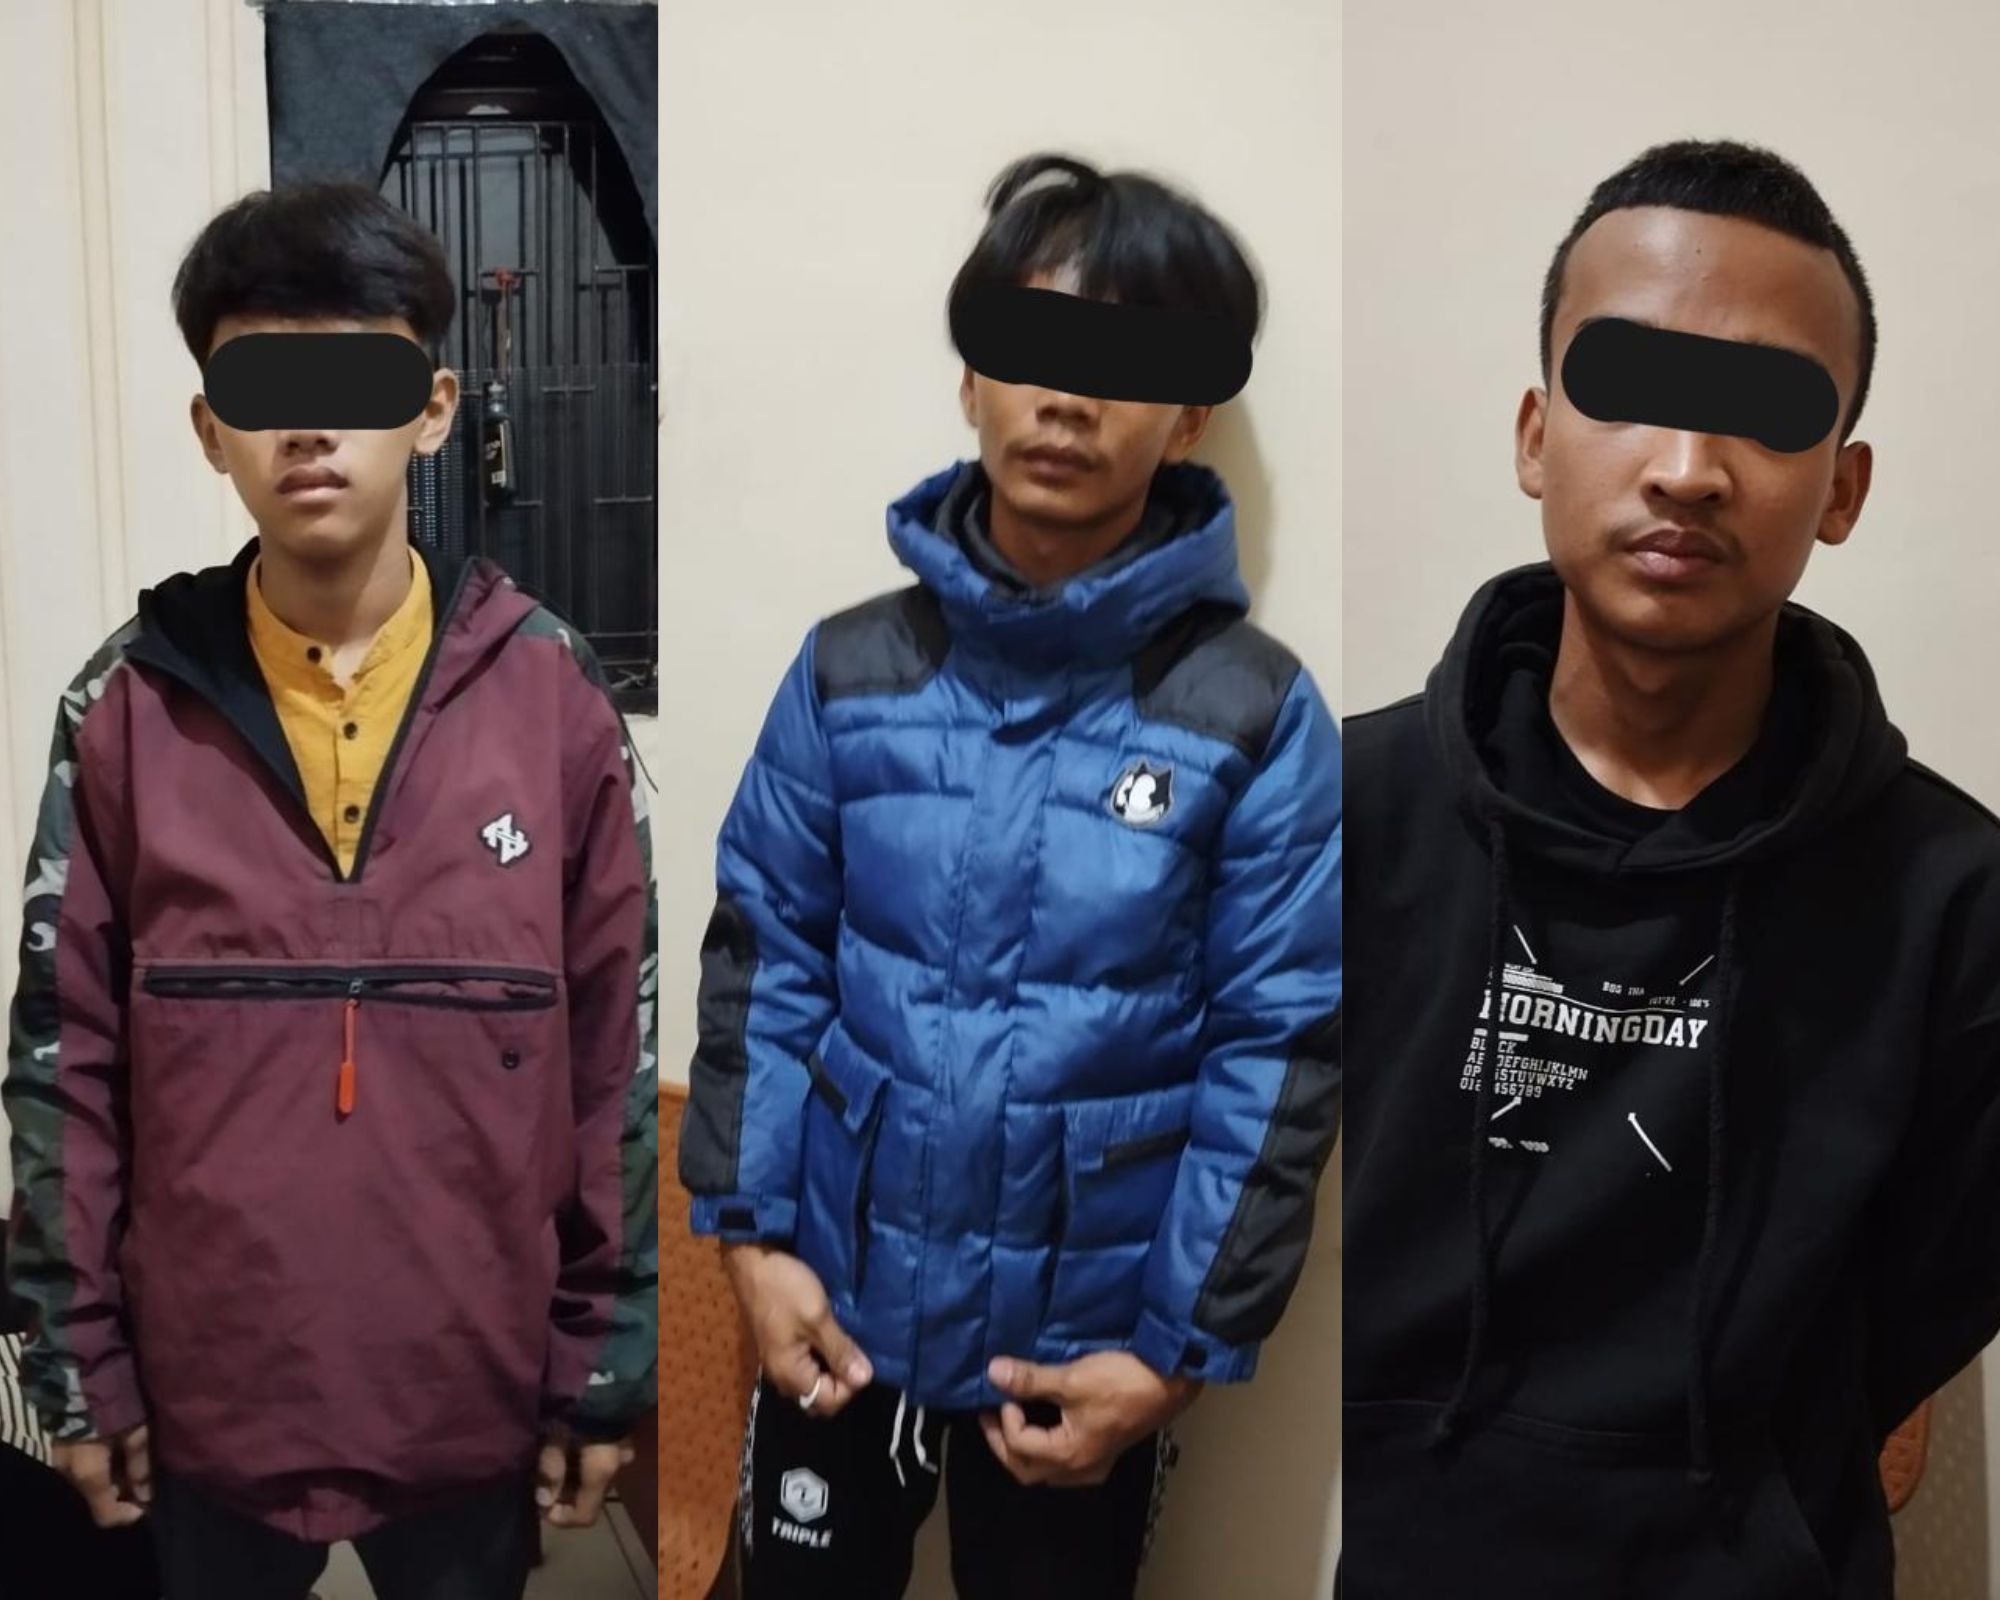 Tiga Pelaku Pemancungan Pelajar di Pasar Ciampea Ditangkap, Punya Motif 'Aksi Jagoan'